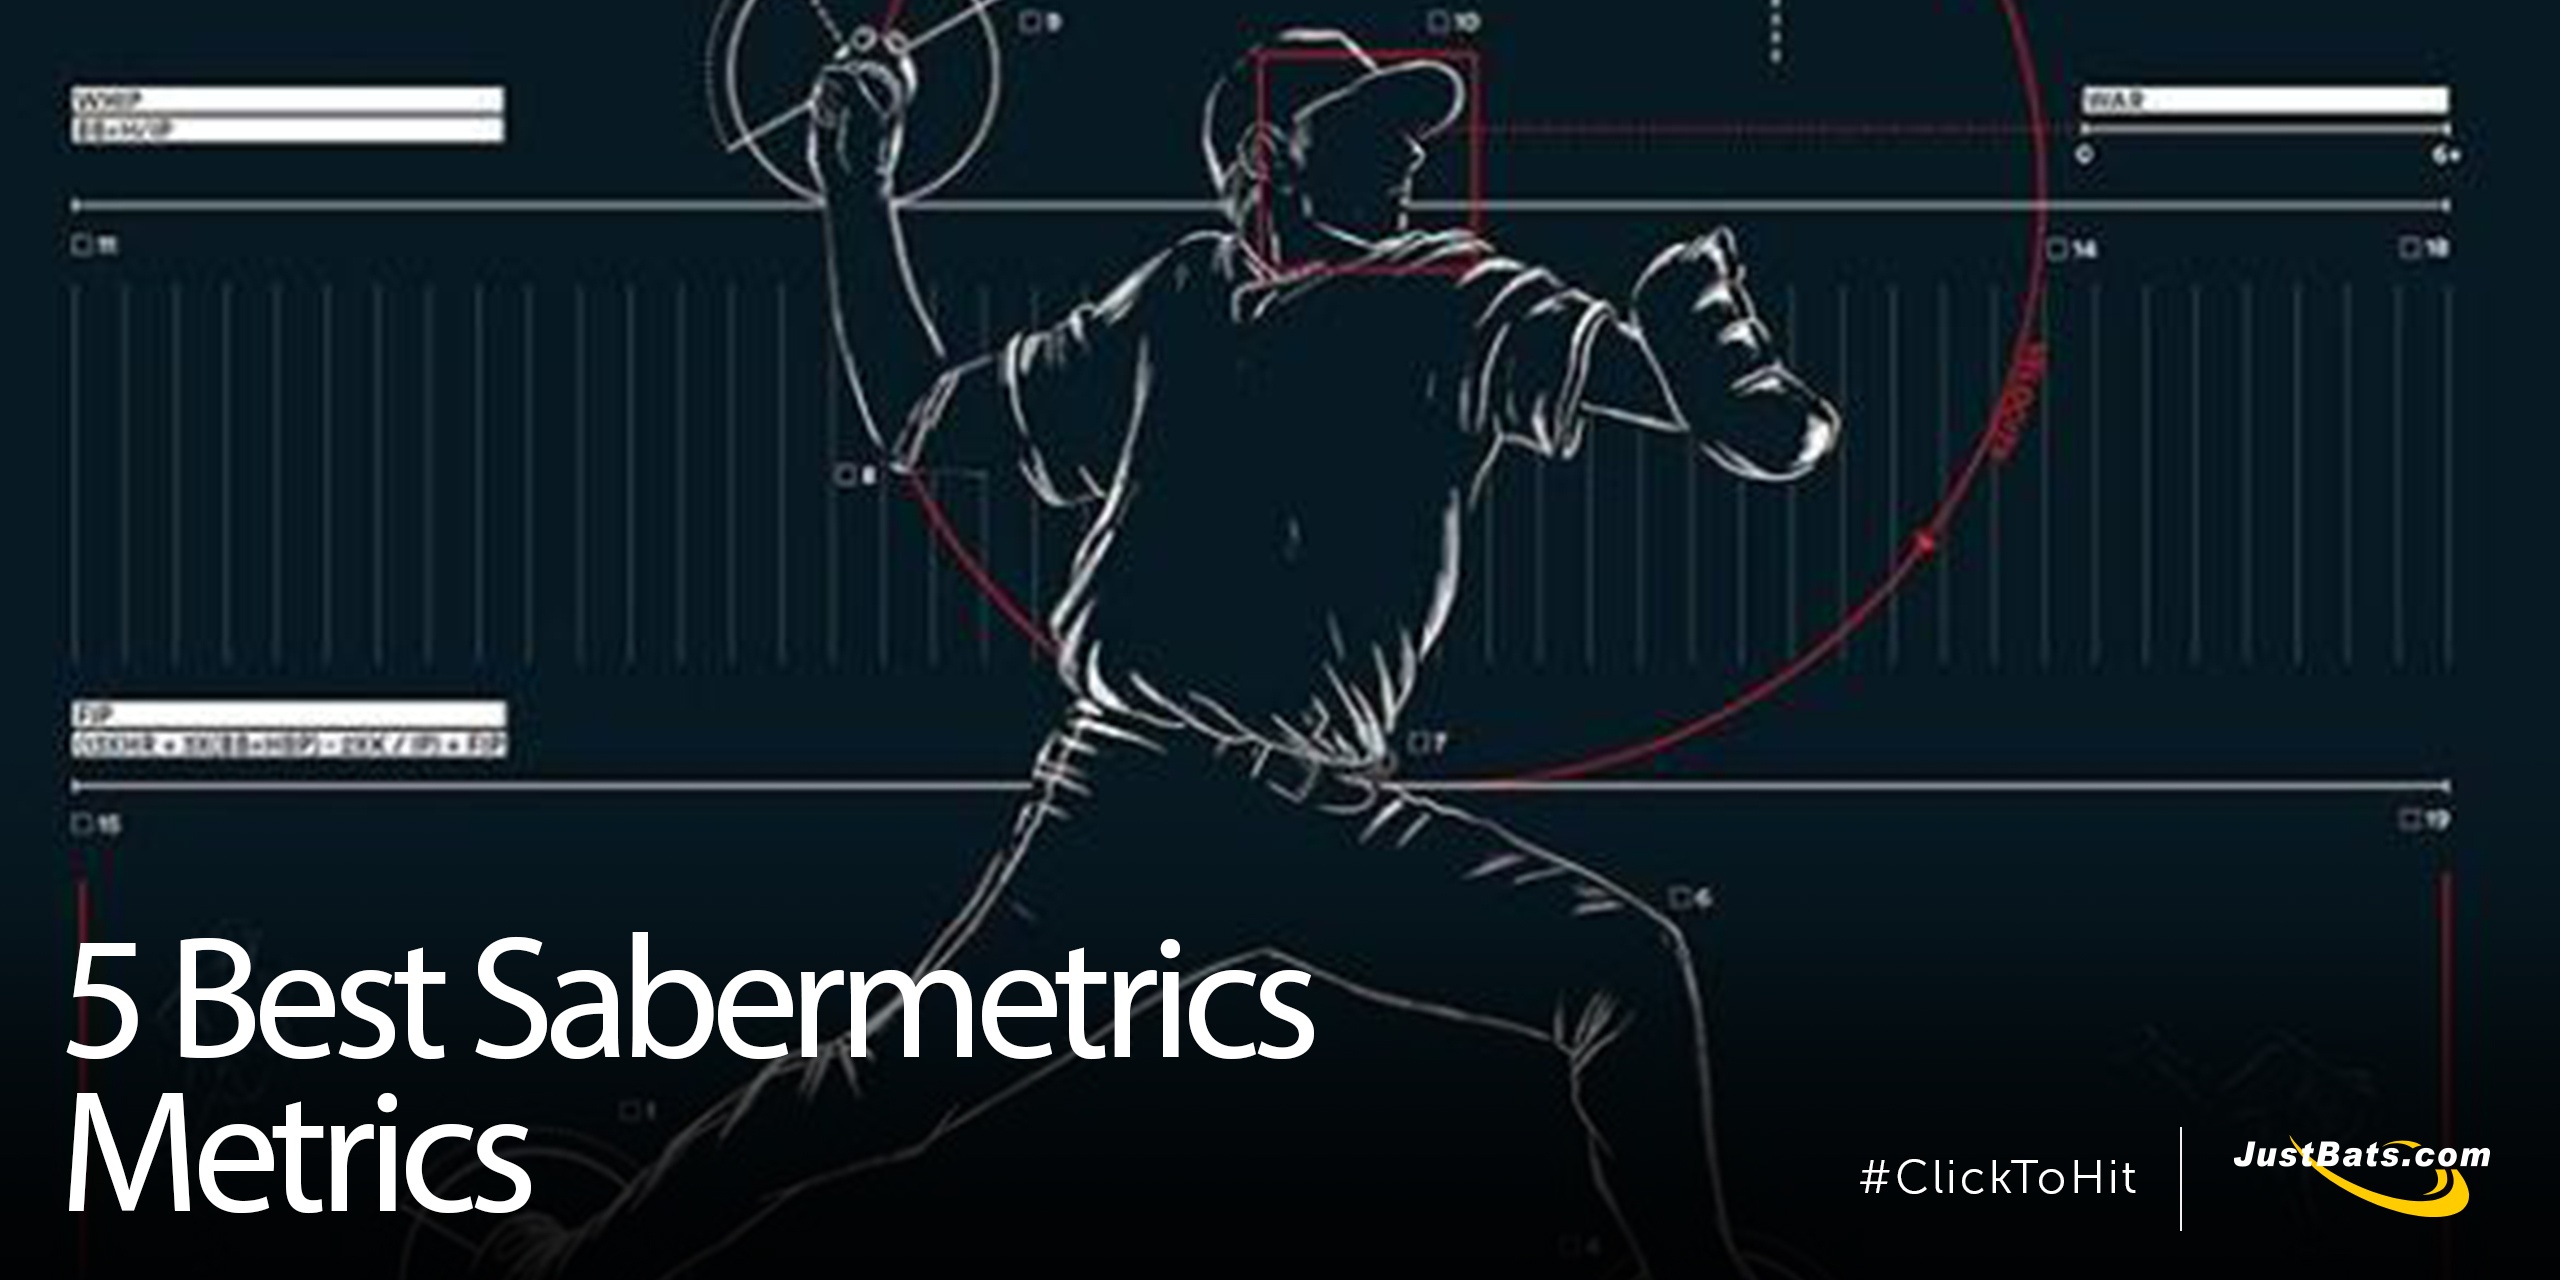 5 Best Sabermetrics Metrics - Blog.jpg